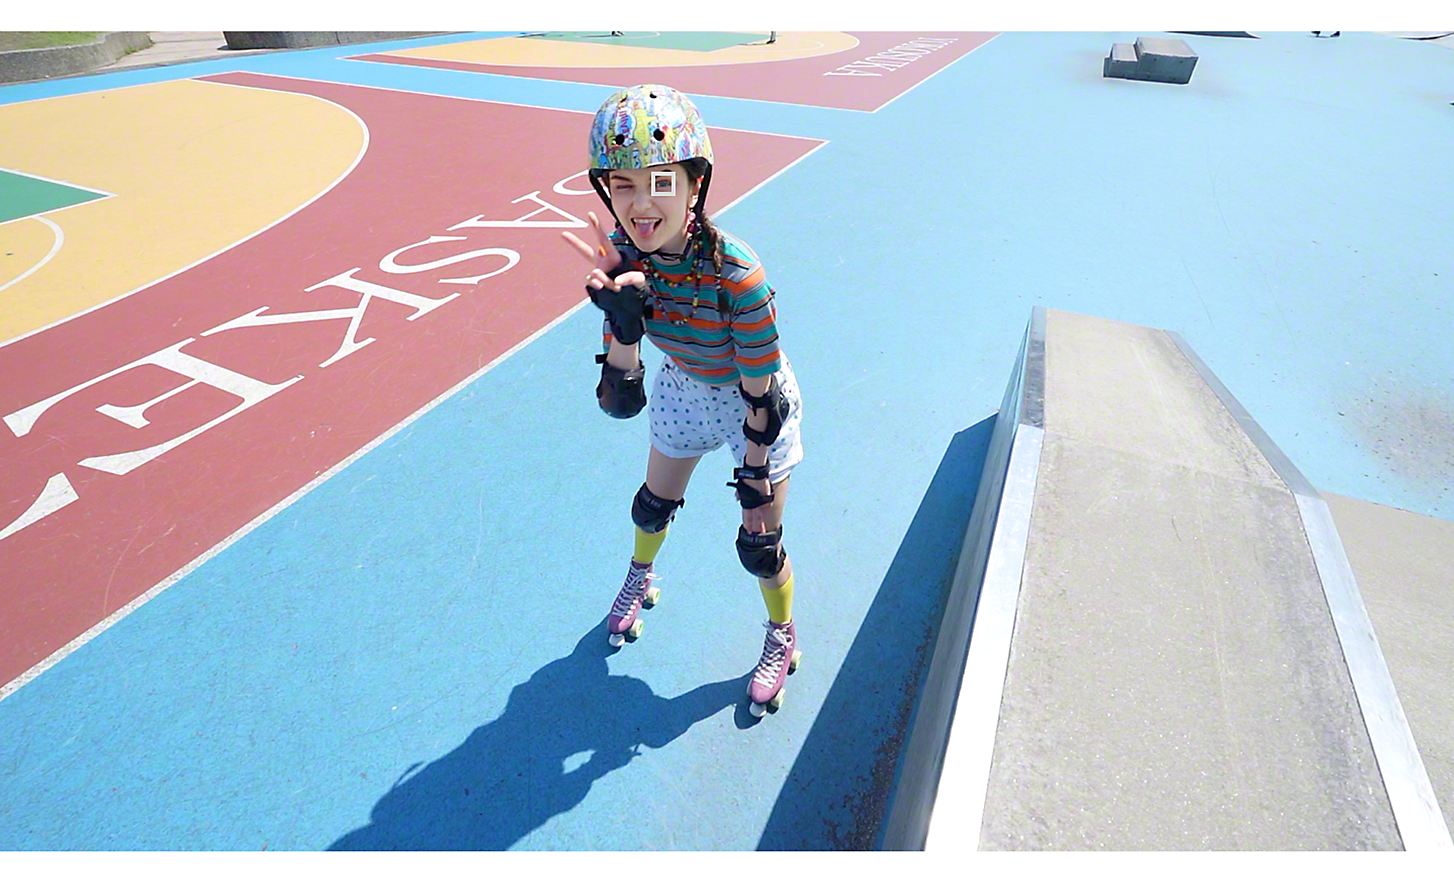 Portrait of a female roller skater at a skate park, a white square over her eye denoting Eye AF for video